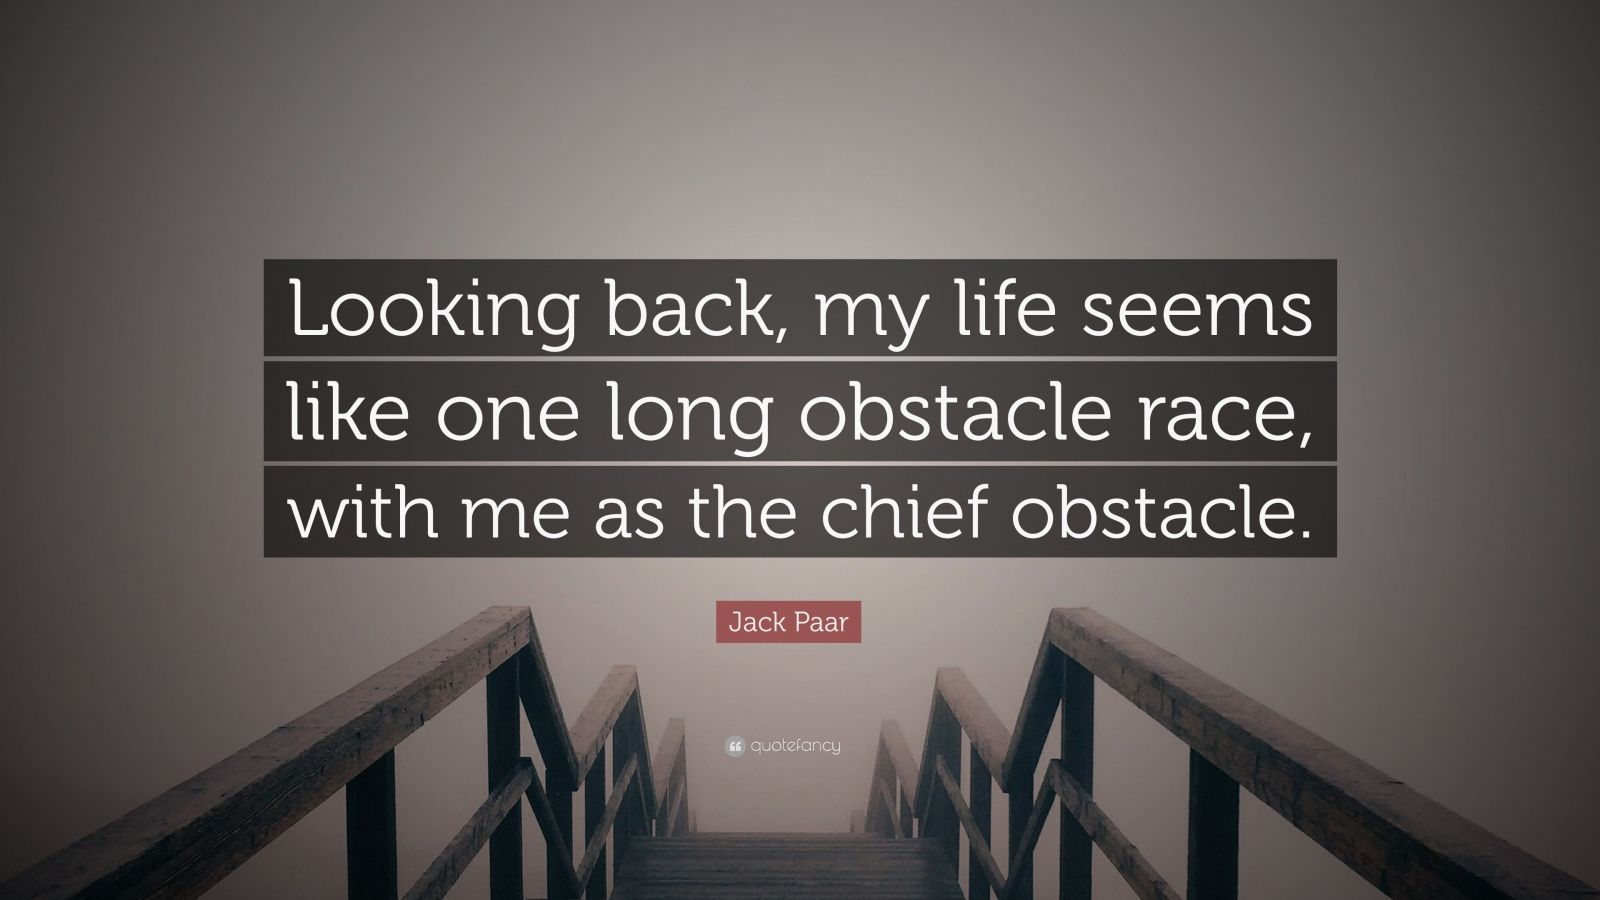 Jack Paar Quote: “Looking back